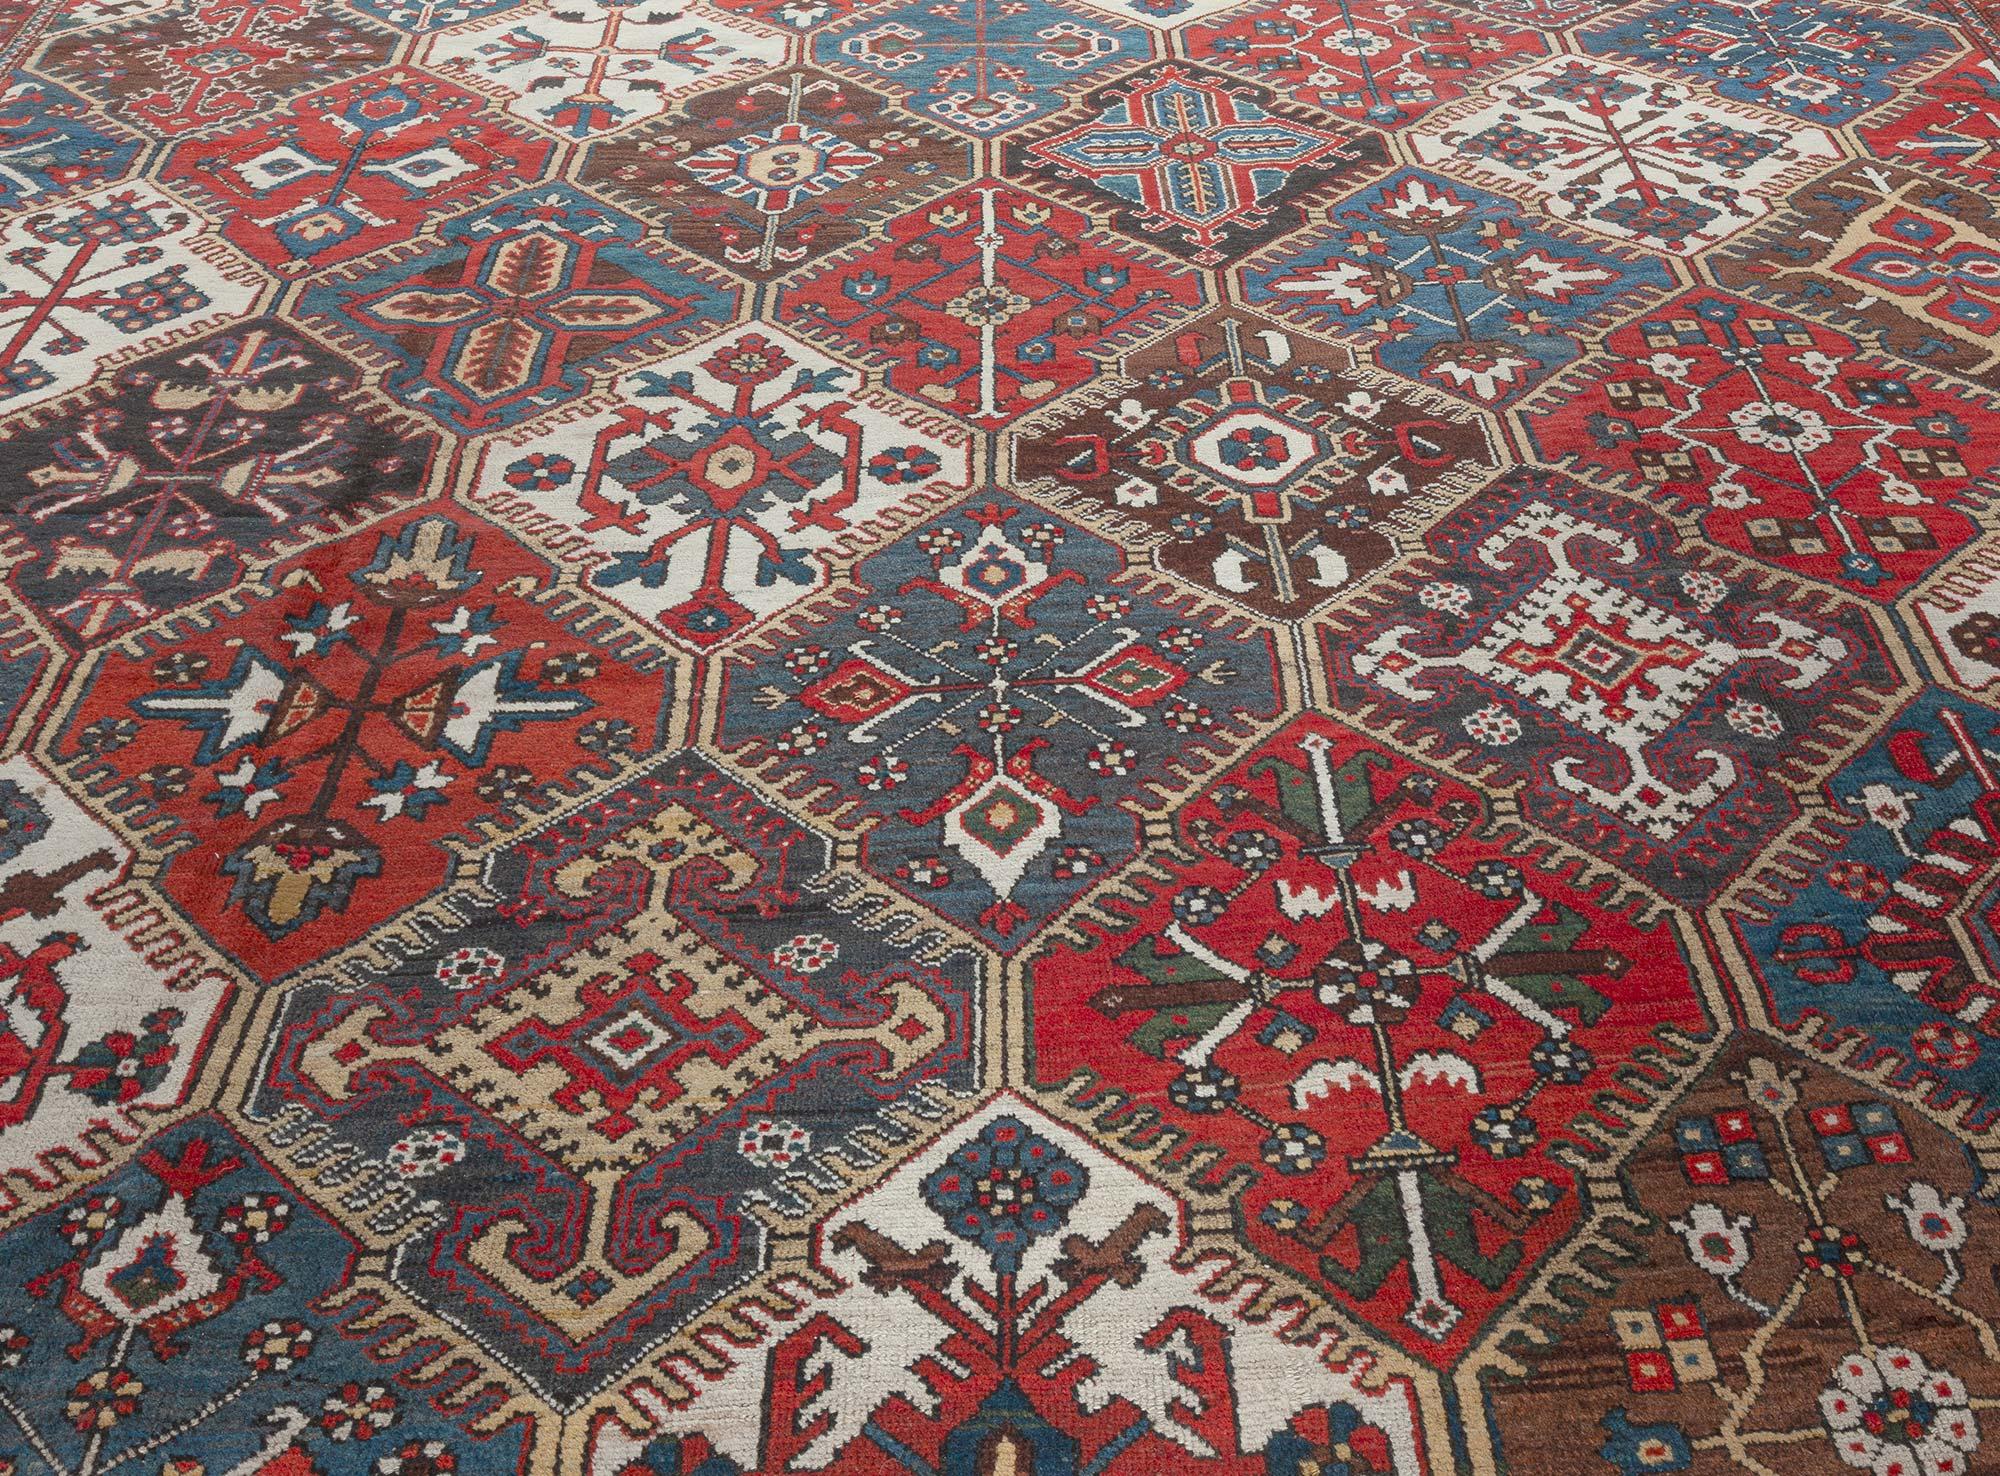 Authentic 19th Century Persian Bakhtiari carpet
Size: 12'10